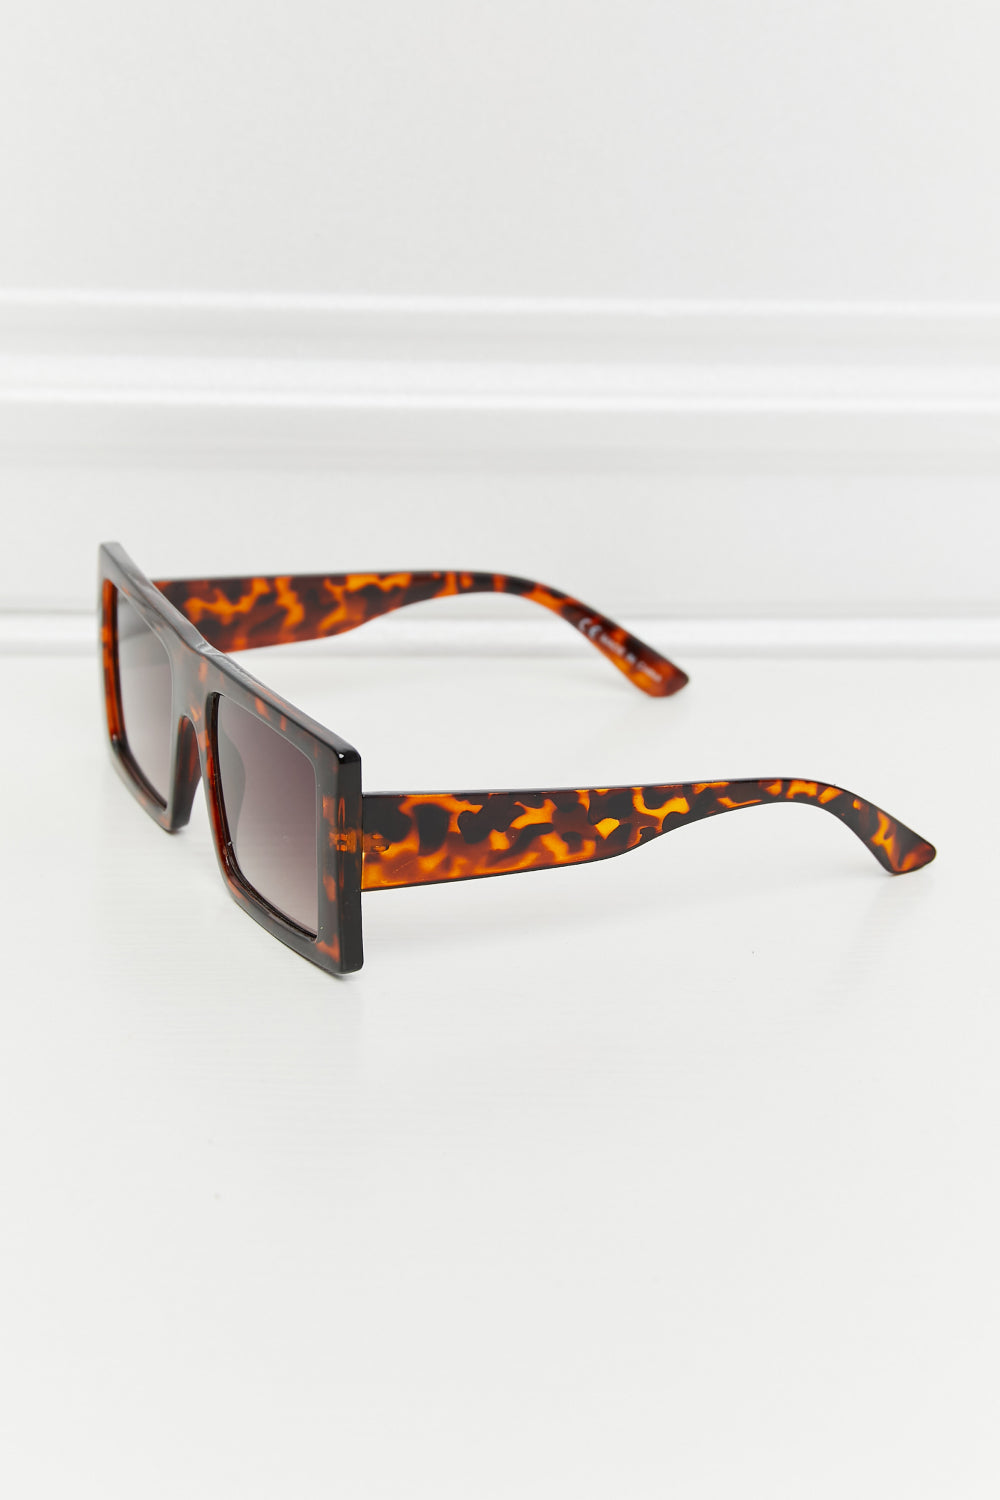 Square Polycarbonate Sunglasses - BEAUTY COSMOTICS SHOP